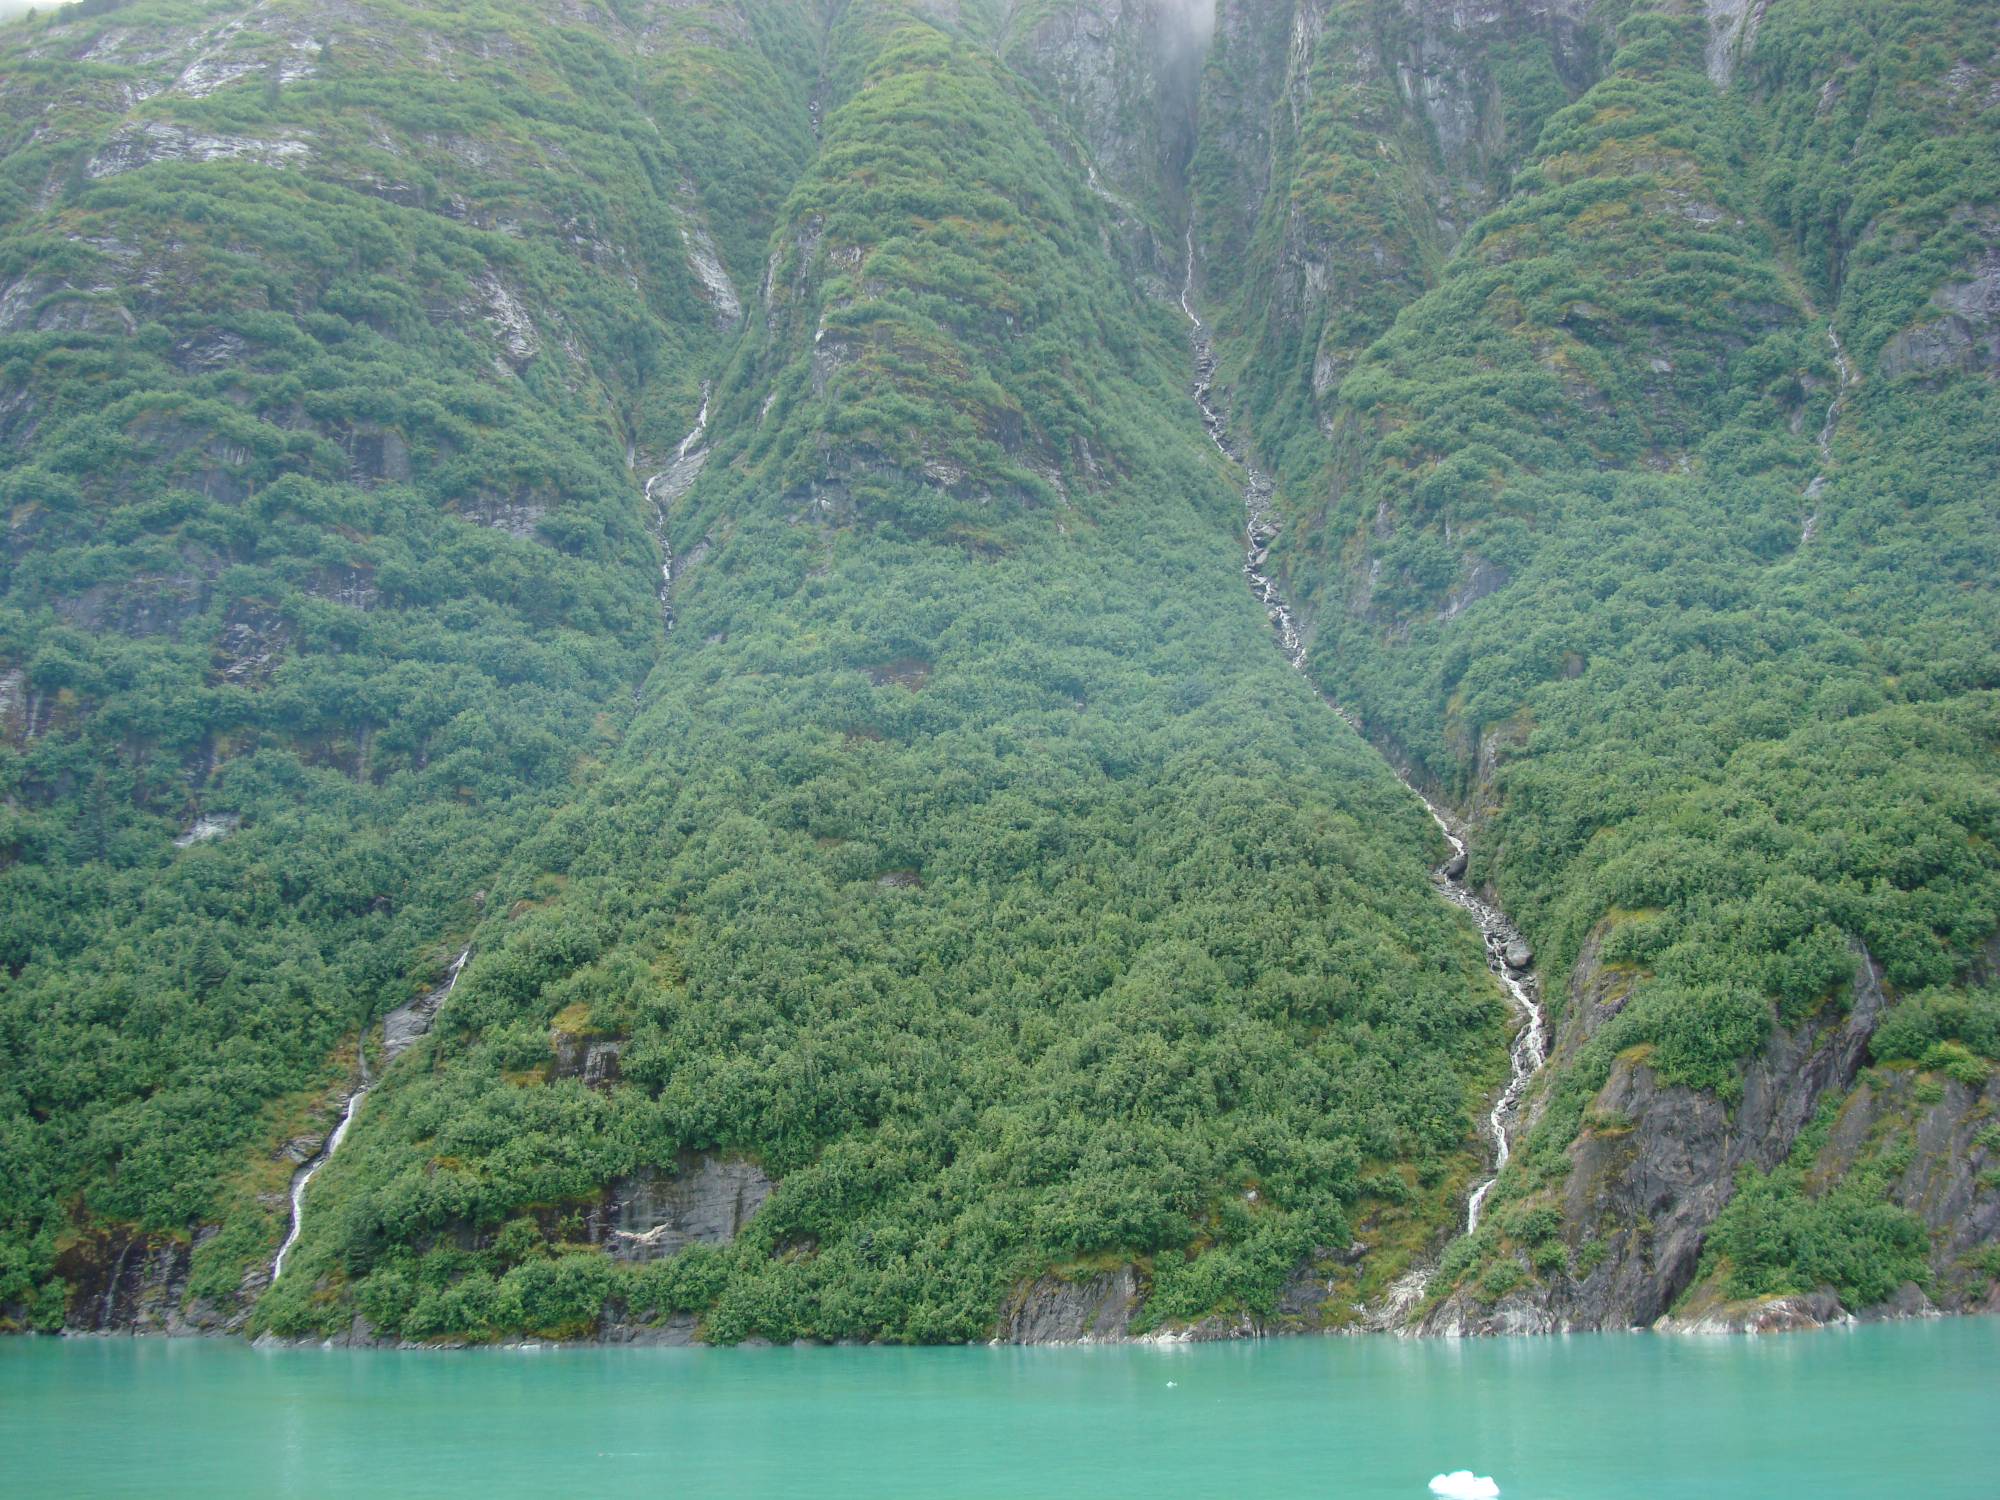 Alaska - Tracy Arm Fjord